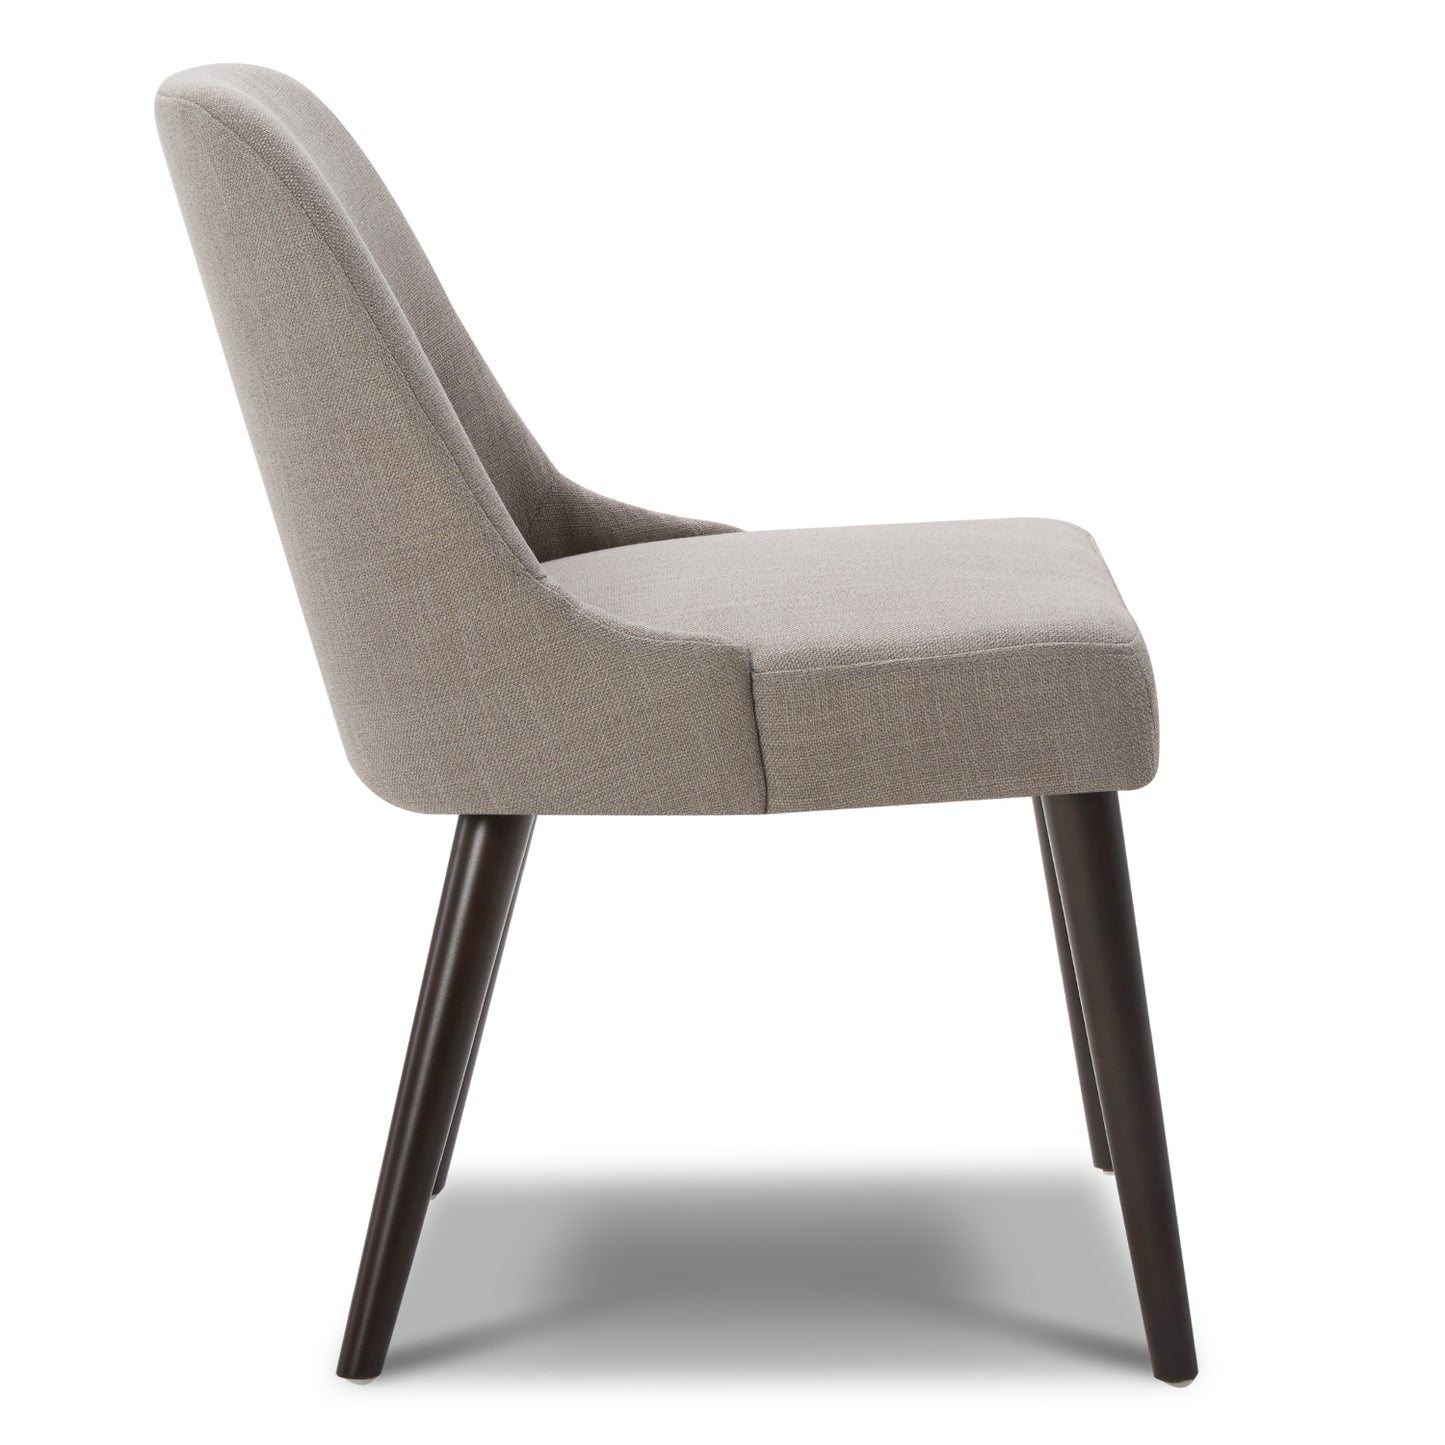 CHITA LIVING-Rhett Dining Chair (Set of 2)-Dining Chairs-Performance Fabric-Flint Gray-